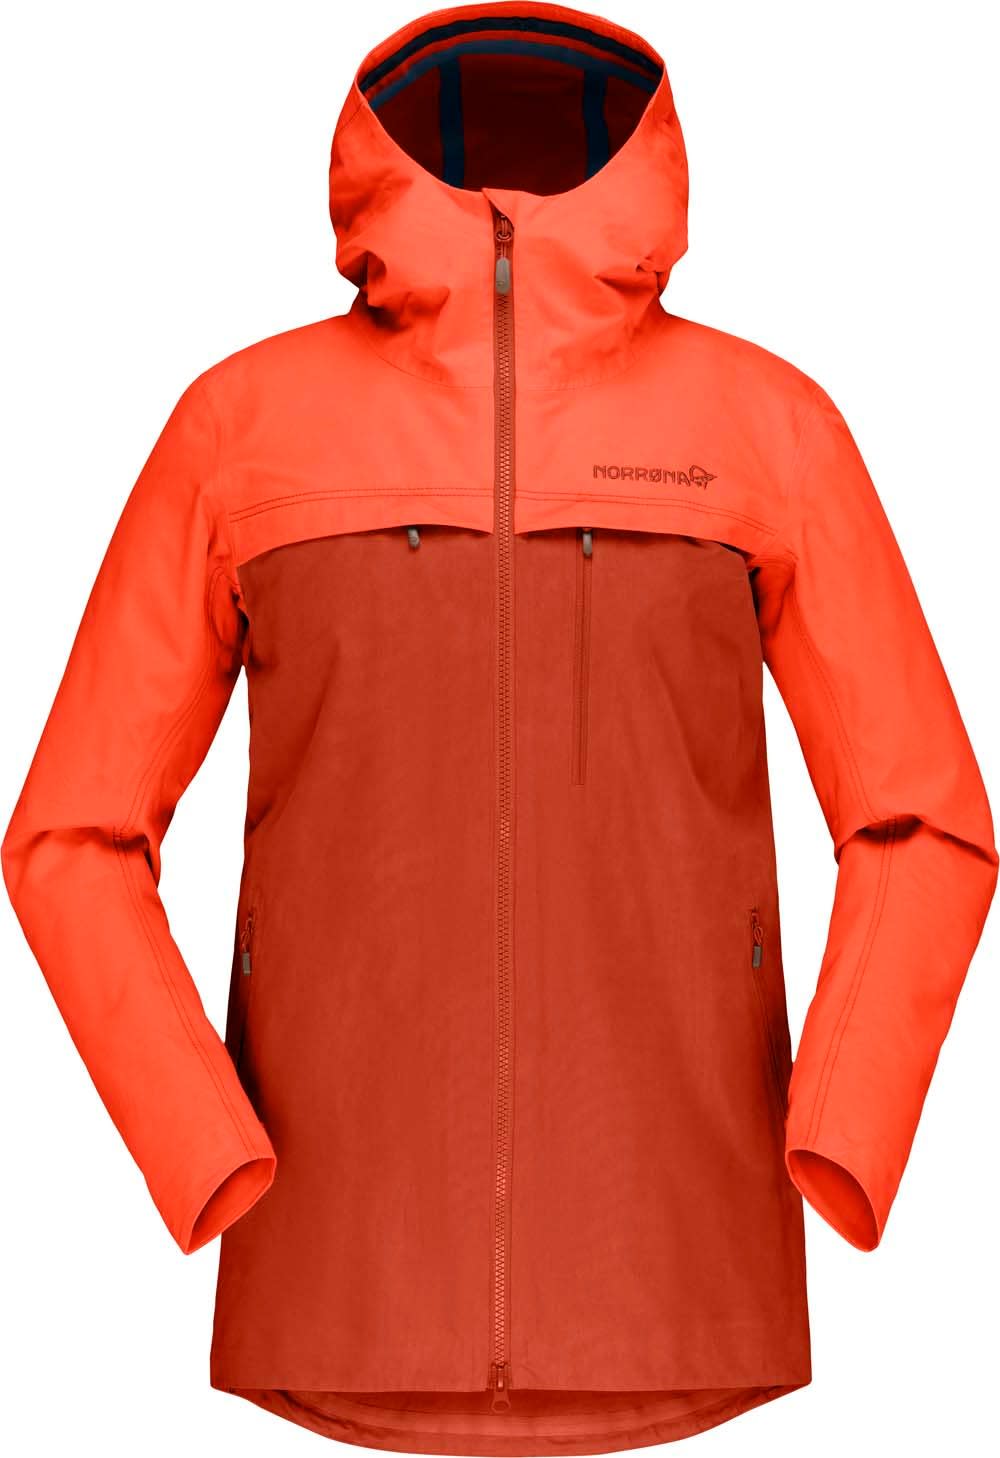 Women's Svalbard Cotton Jacket Orange Alert/Rooibos Tea